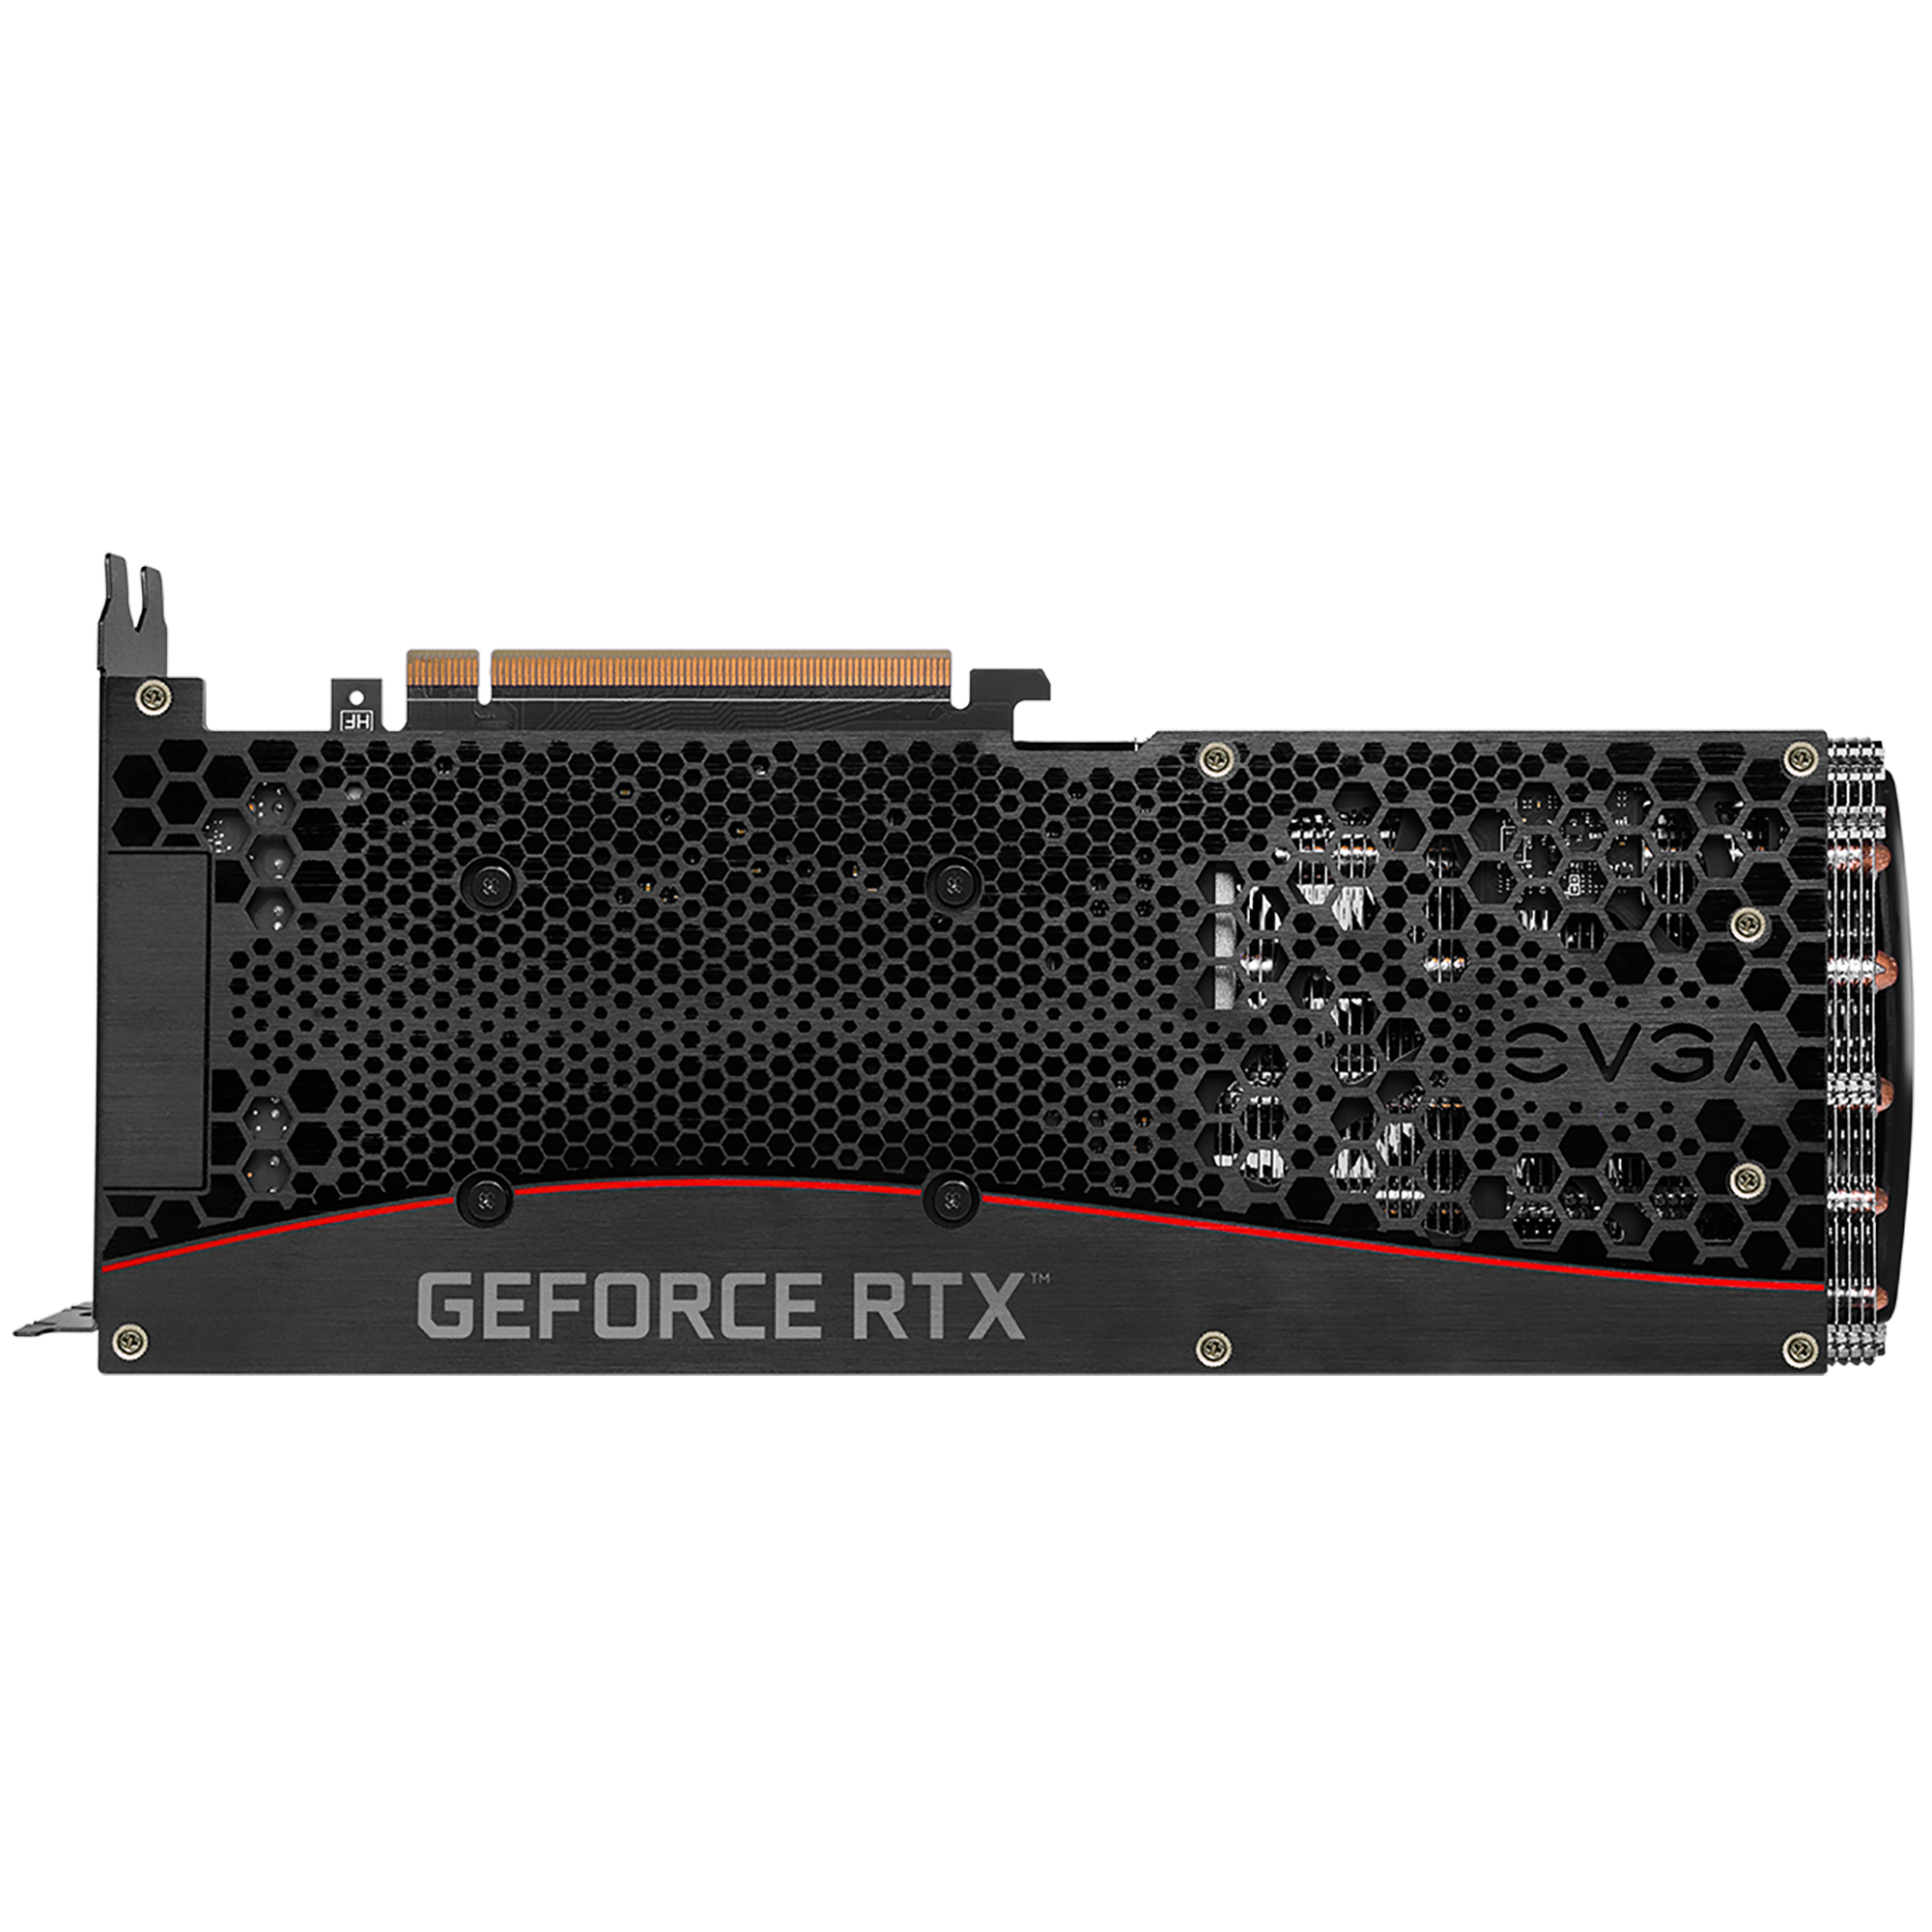 EVGA - Products - EVGA GeForce RTX 3070 Ti XC3 GAMING, 08G-P5-3783 